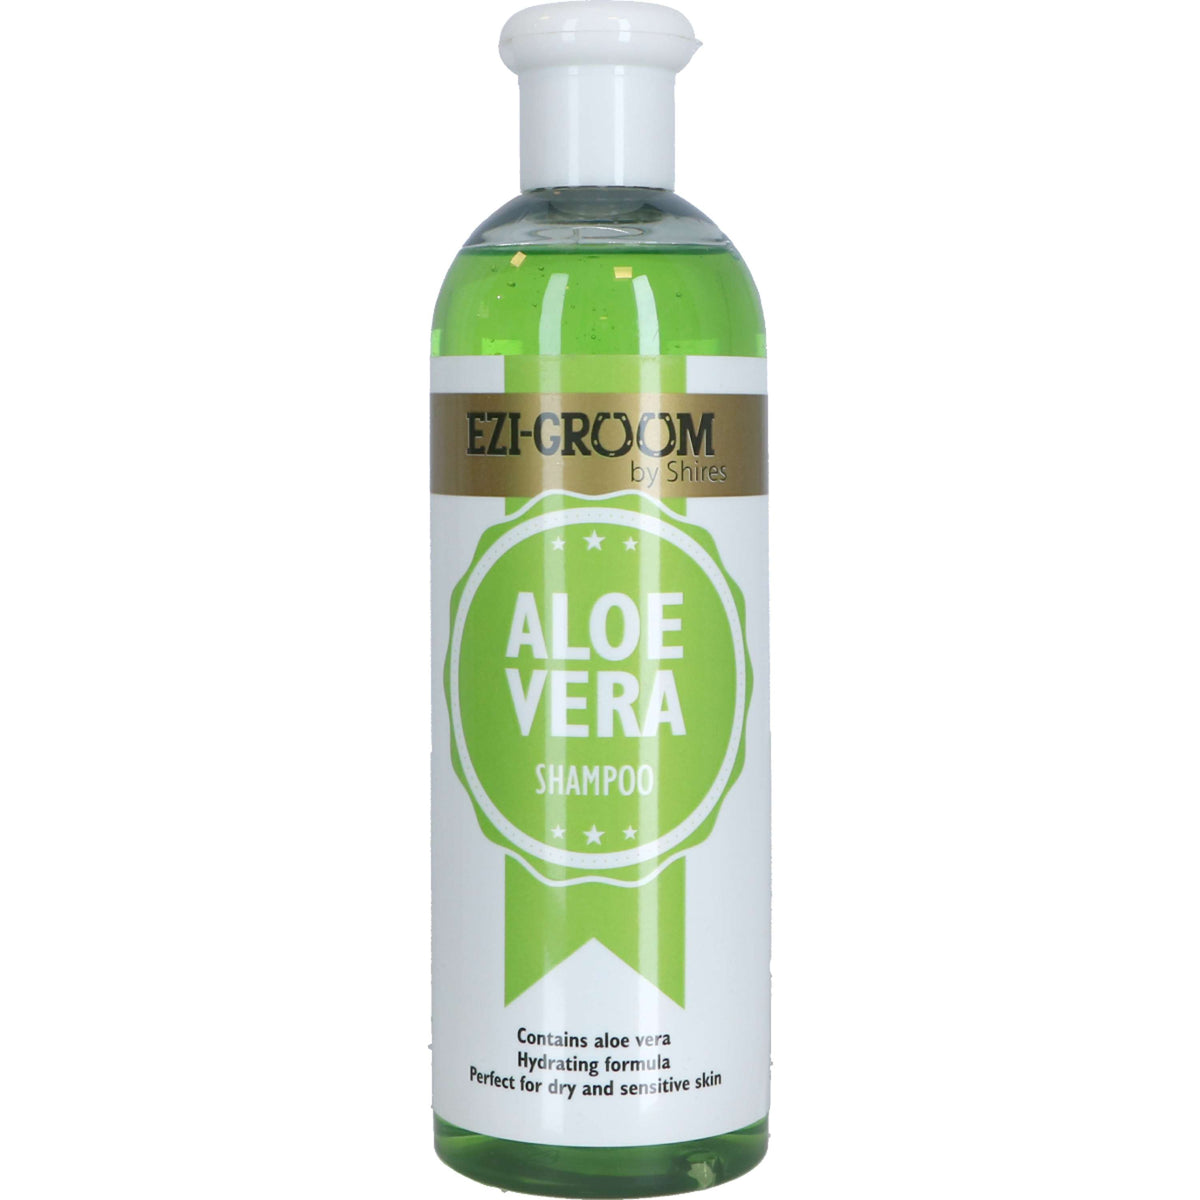 Ezi-groom Shampoo Aloe Vera Grün